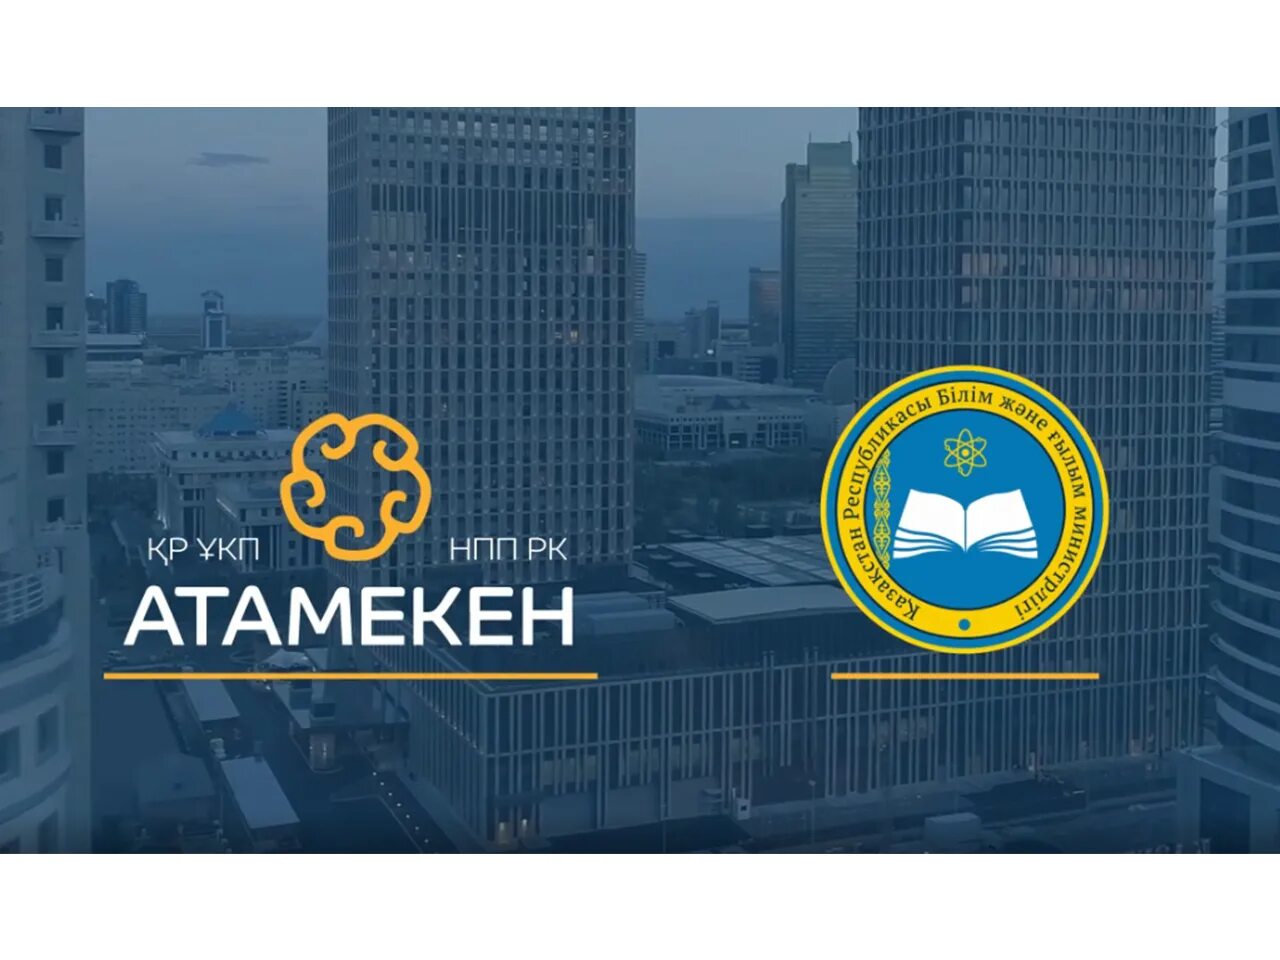 Атамекен палата предпринимателей. Атамекен эмблема. НПП Атамекен логотип. Атамекен / Atameken.